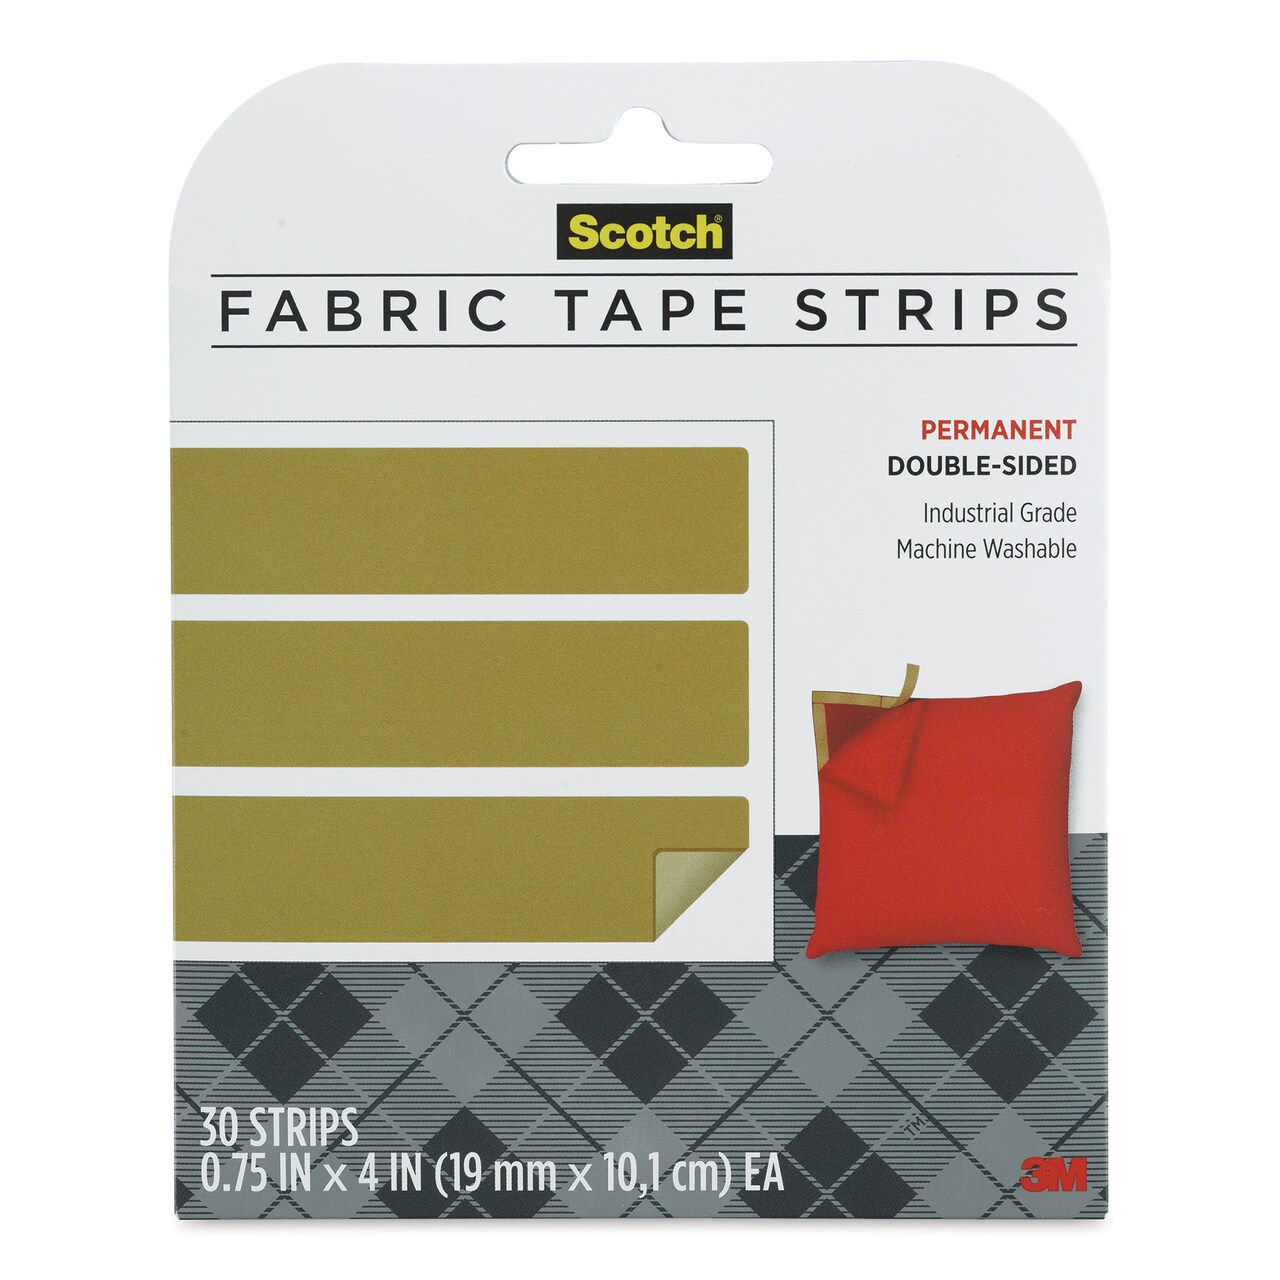 Scotch Permanent Fabric Tape Strips - Pkg of 30